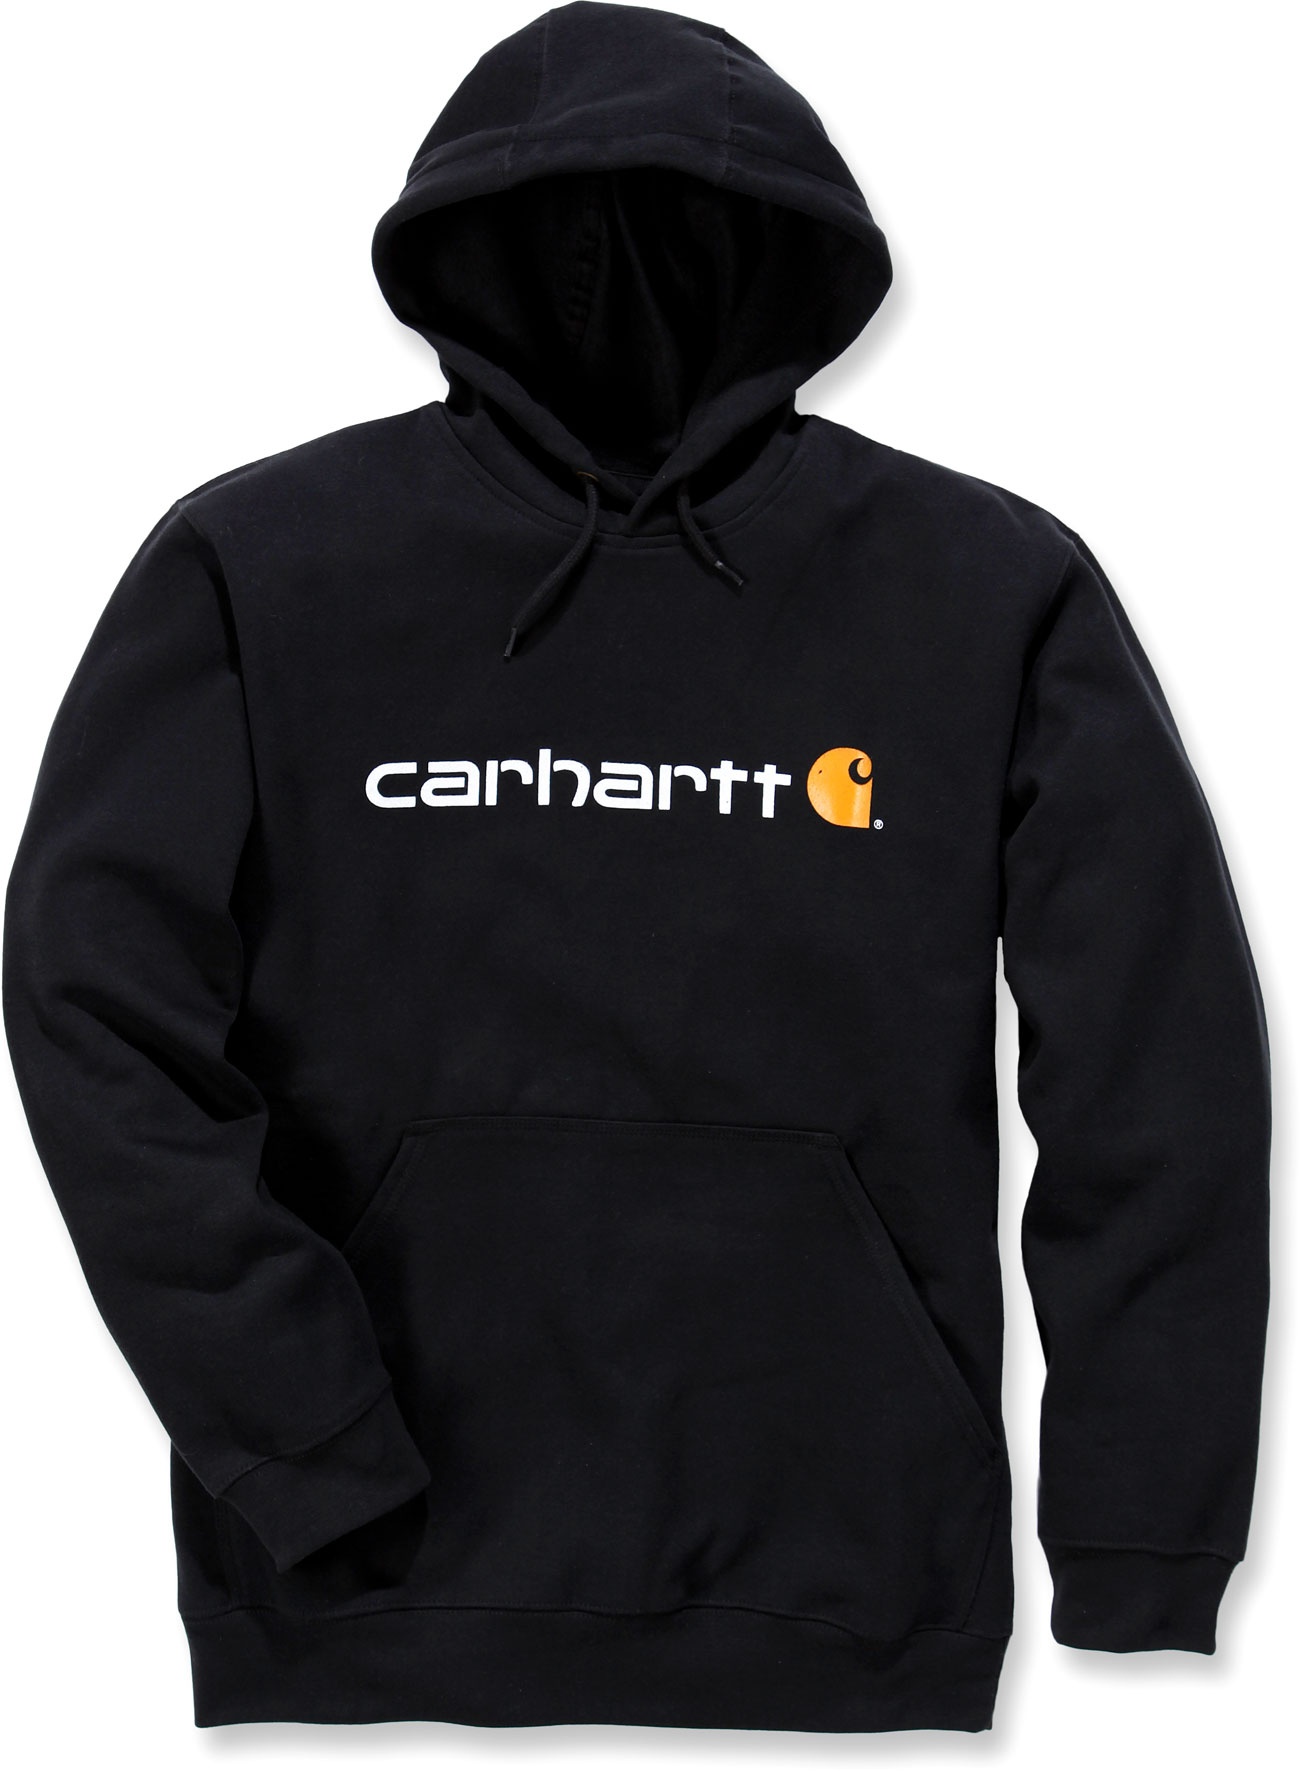 Carhartt Signature Logo, sweat à capuche - Noir - M